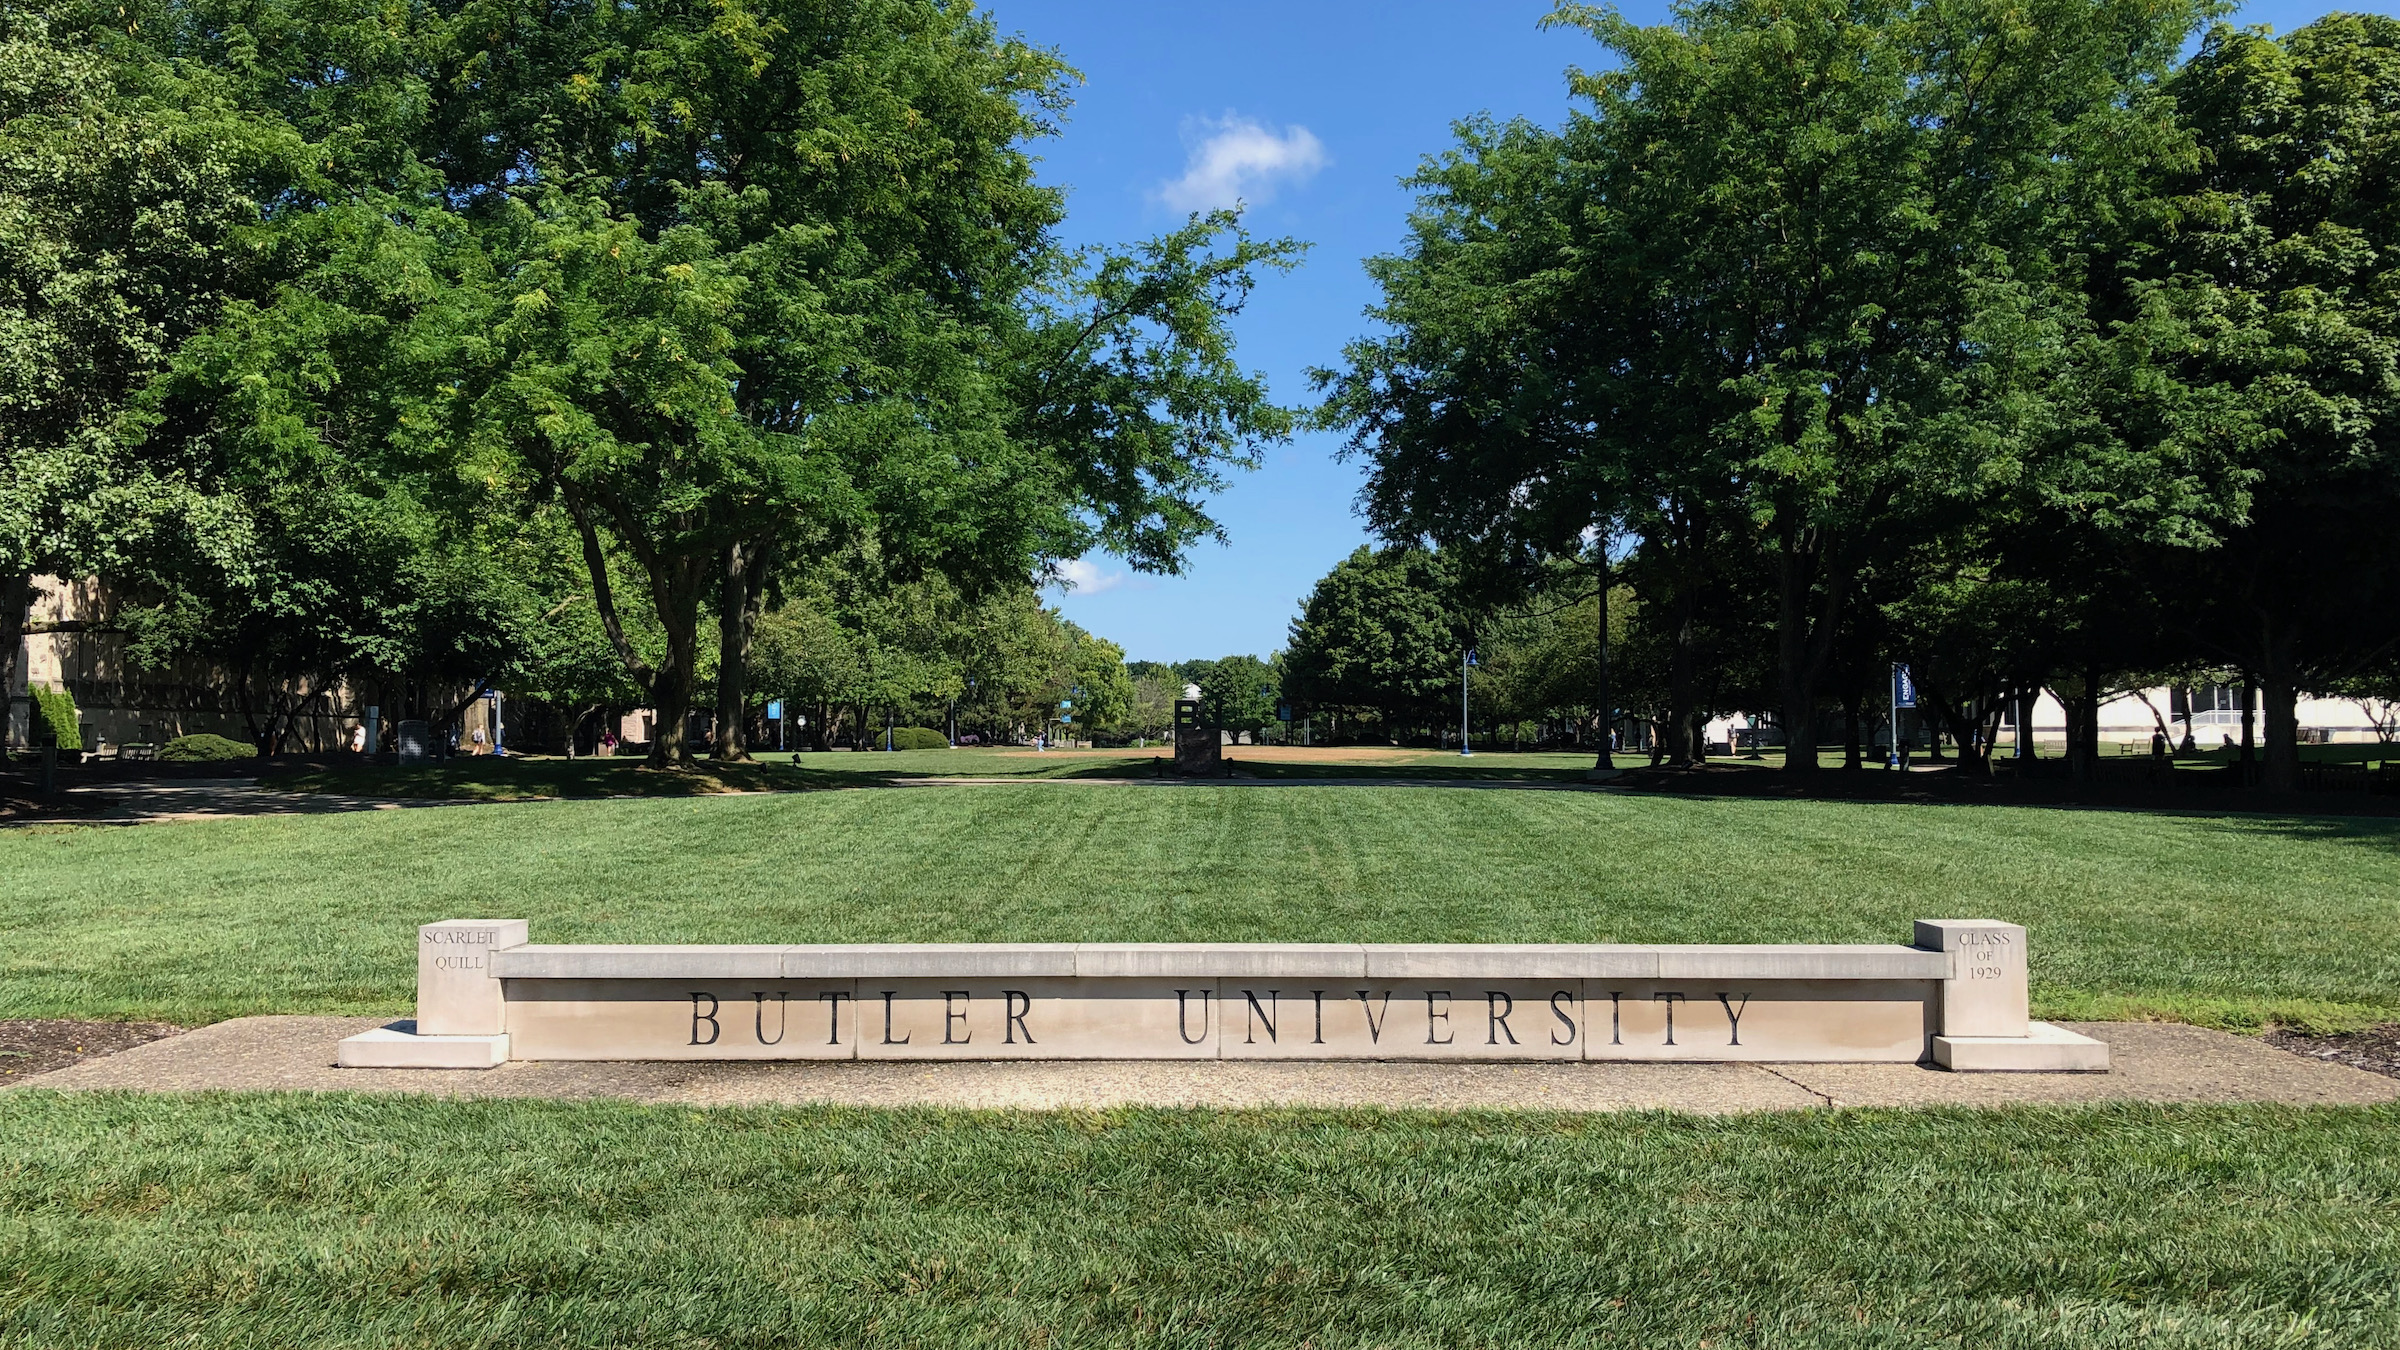 Butler University Ranks 1 in US News list of Best Midwest Universities